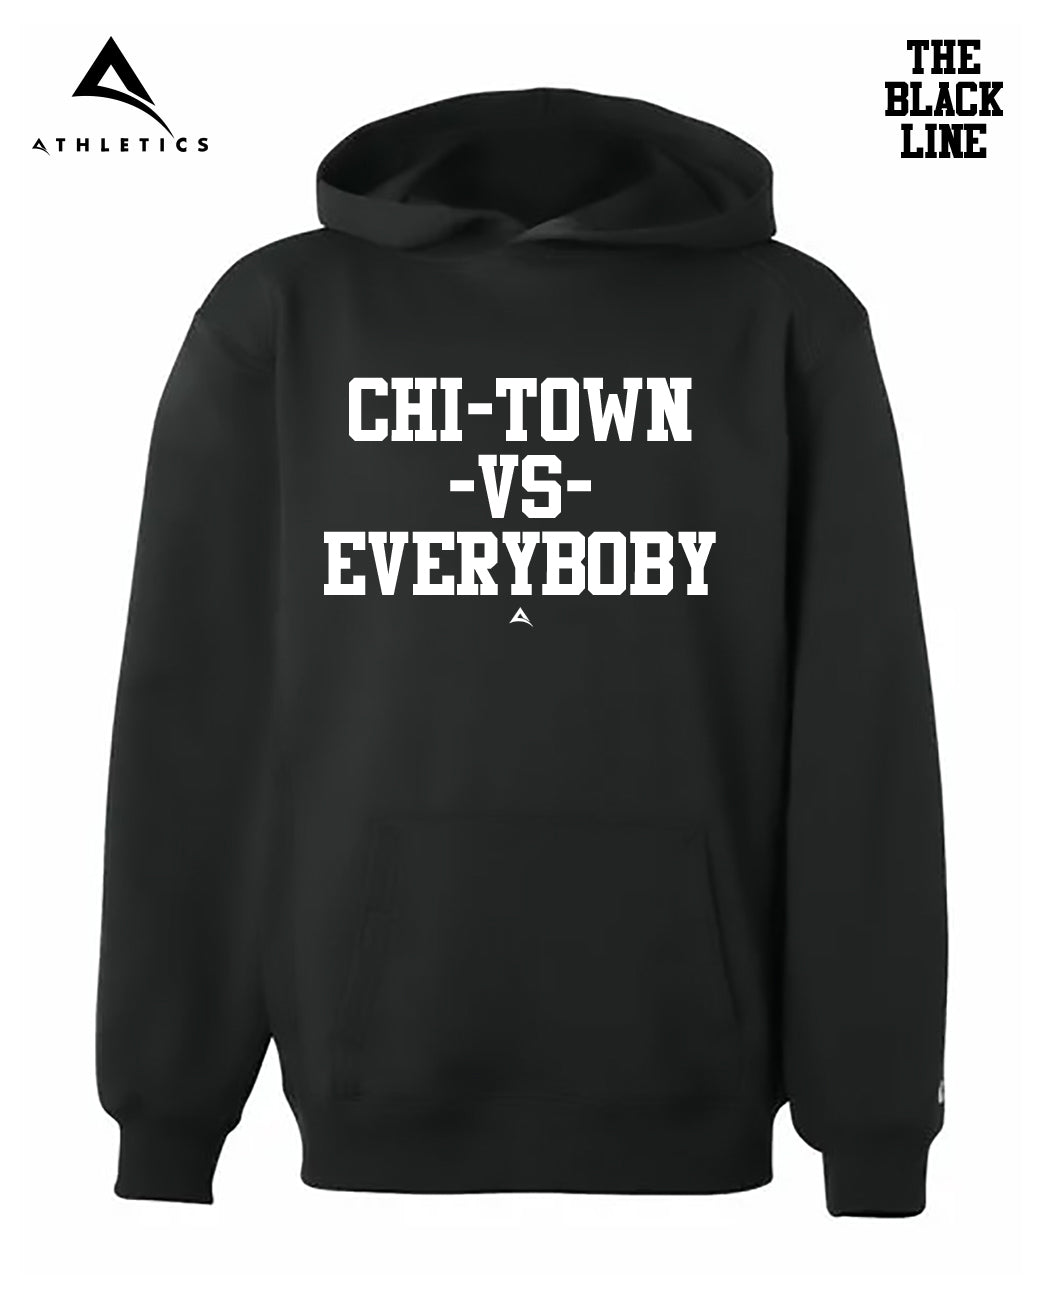 CHI-TOWN Vs EVERYBODY